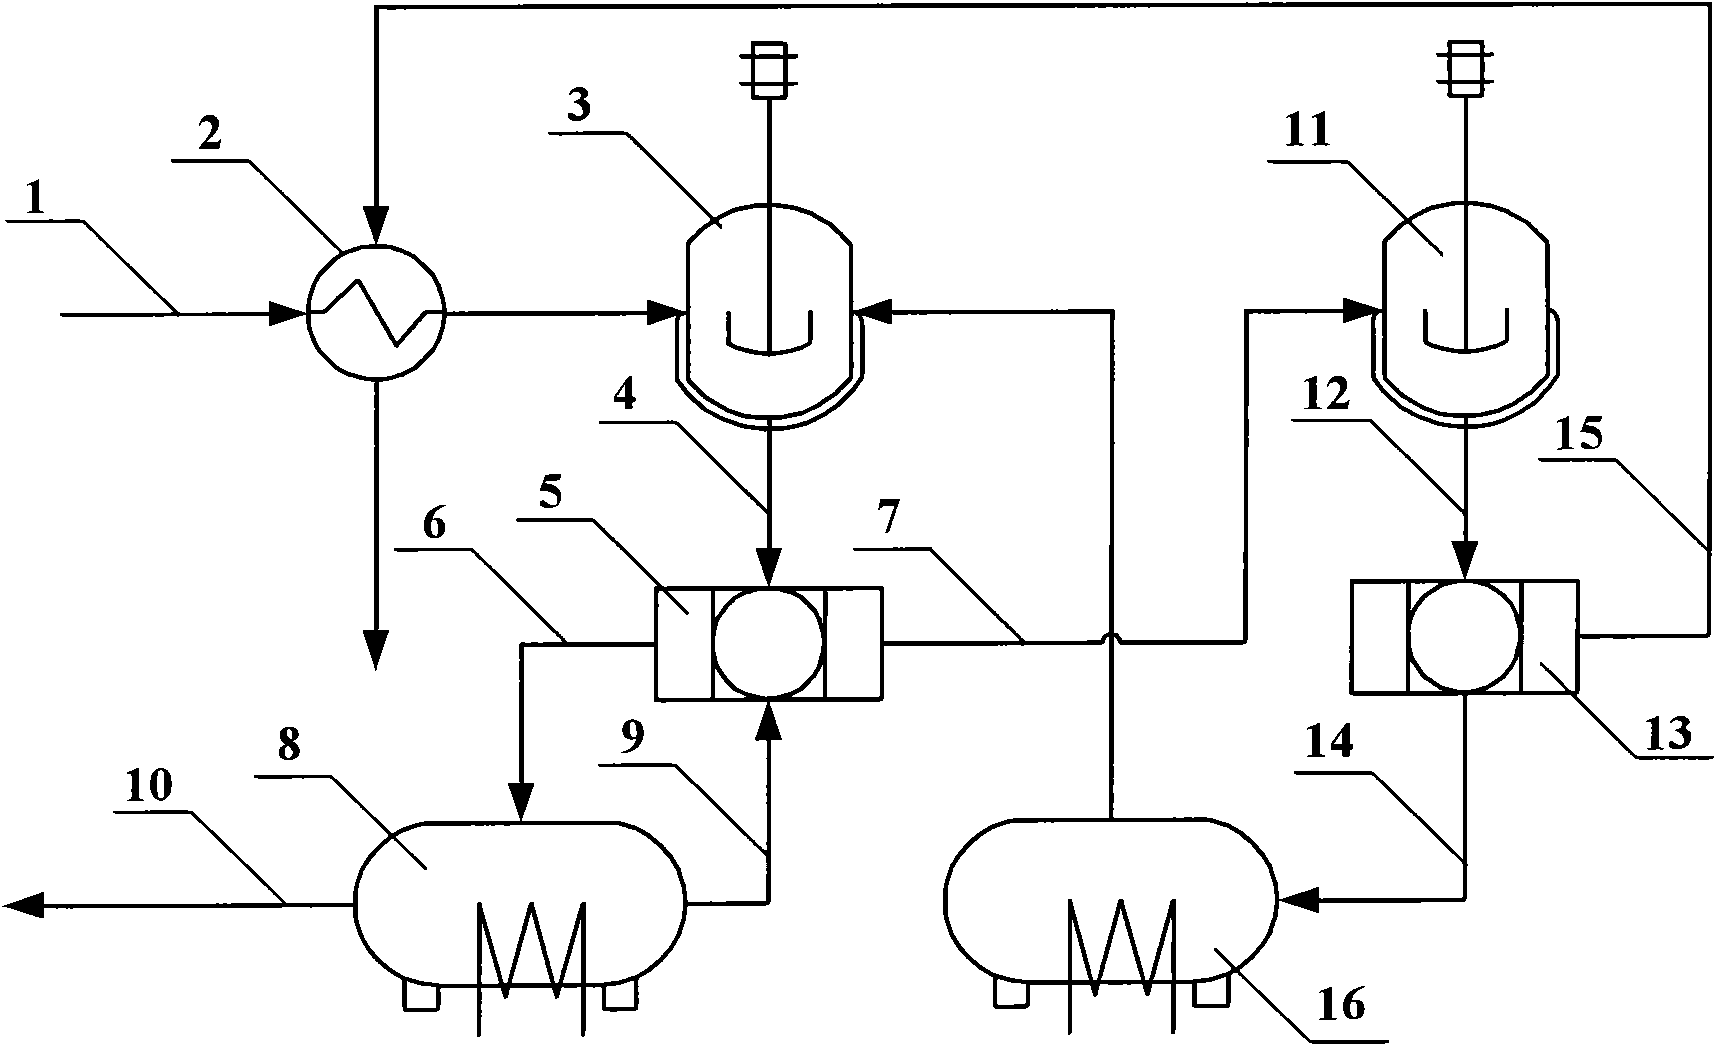 Crystallization method for p-xylene production